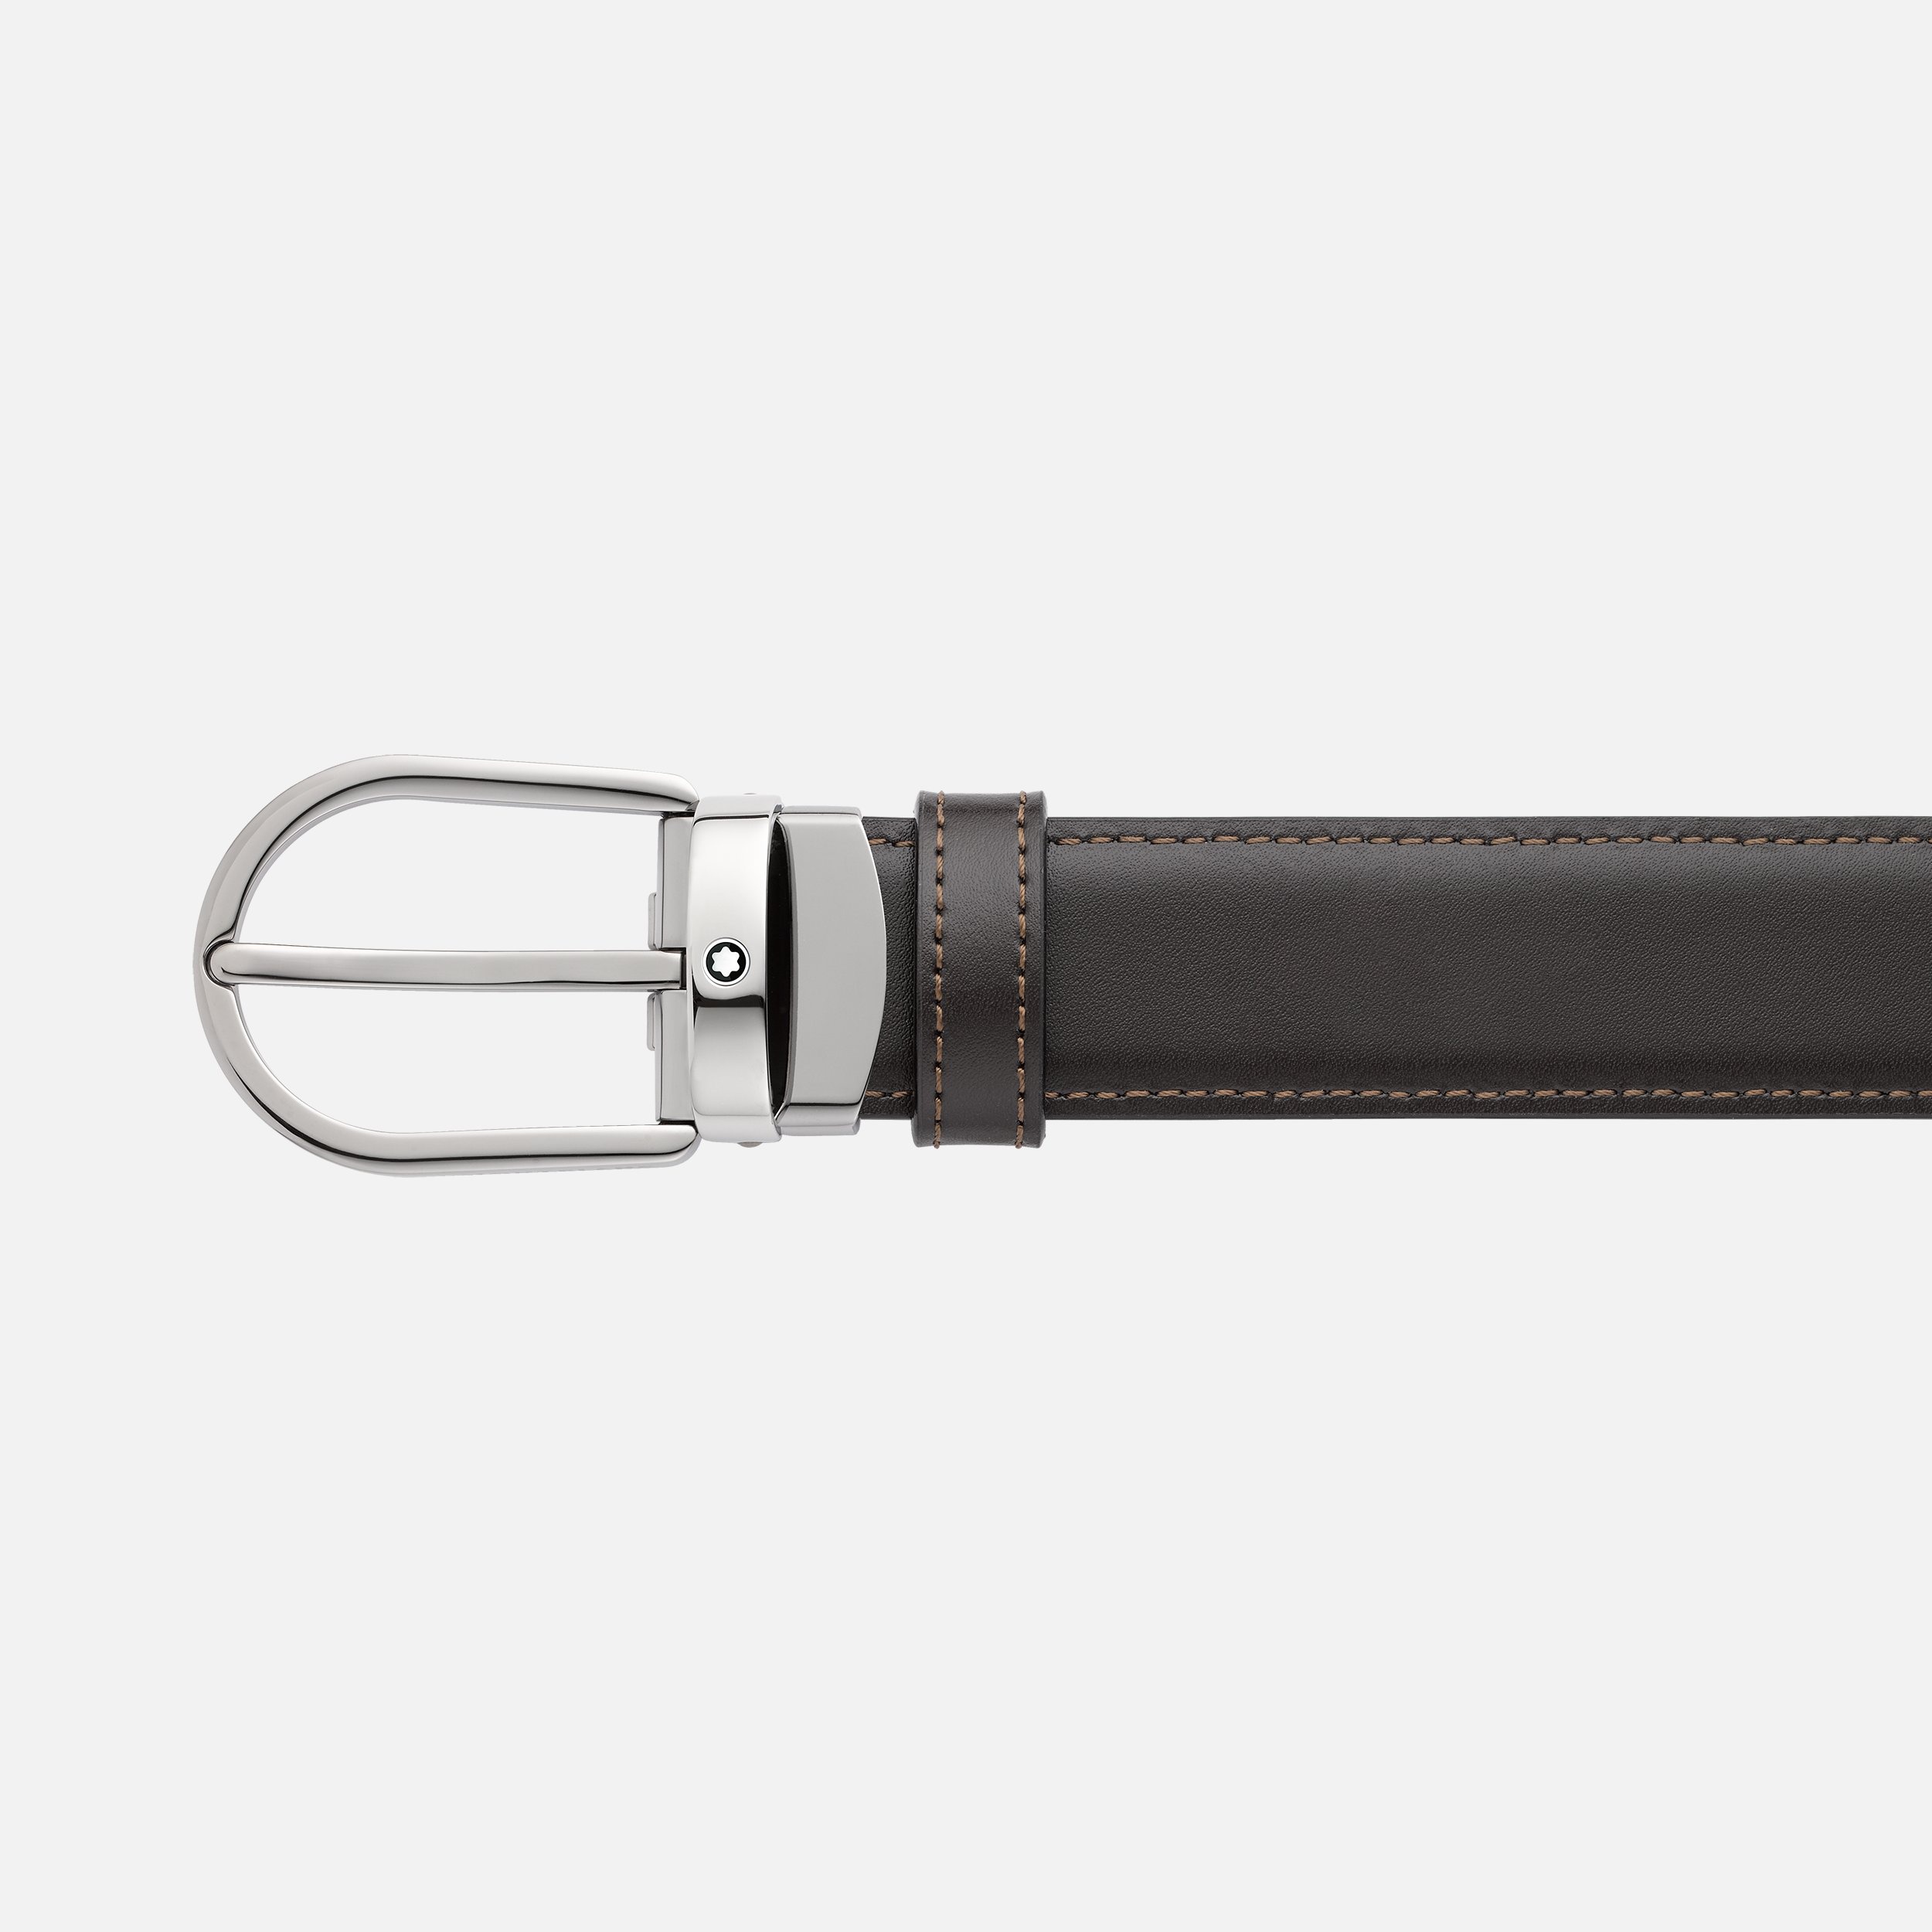 Horseshoe buckle black/brown 30 mm reversible leather belt - 3